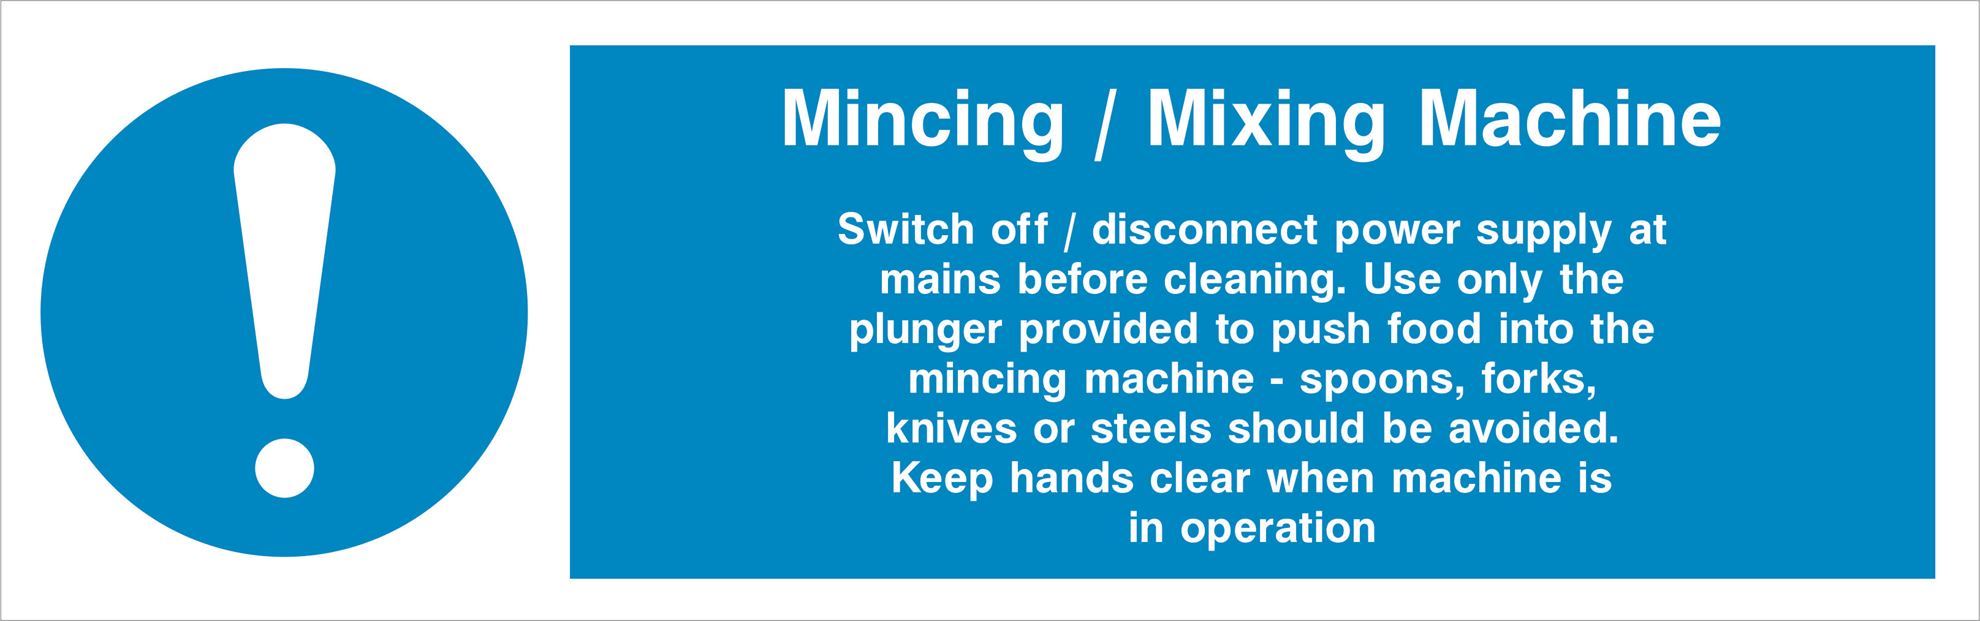 Mincing / Mixing Machine